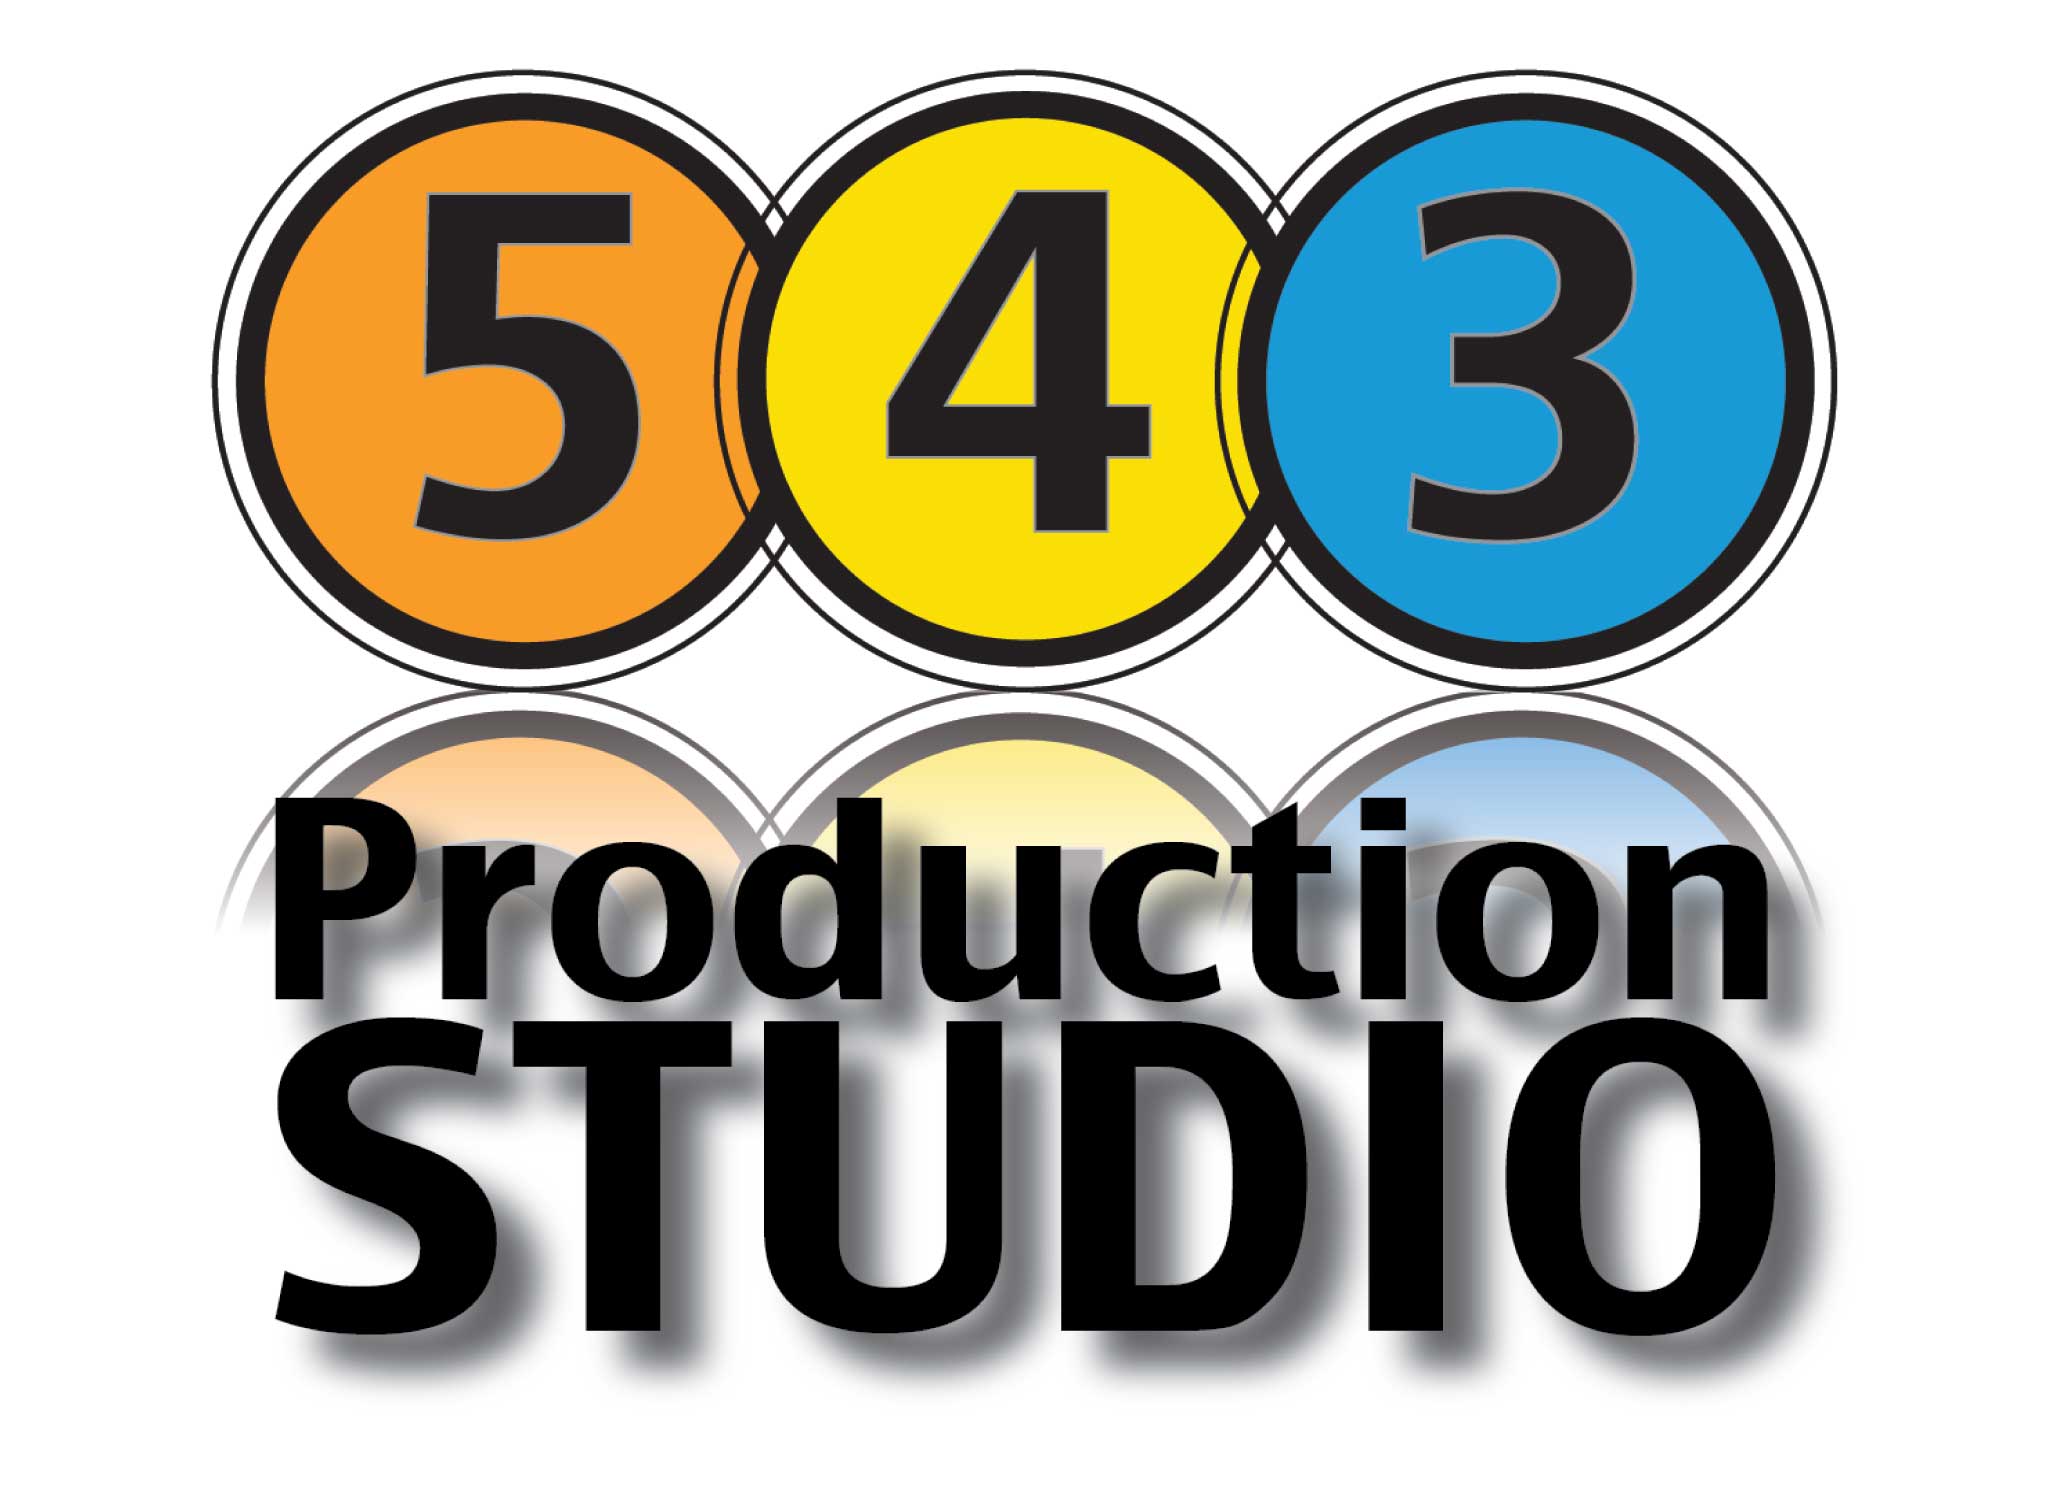 543 Production Studio